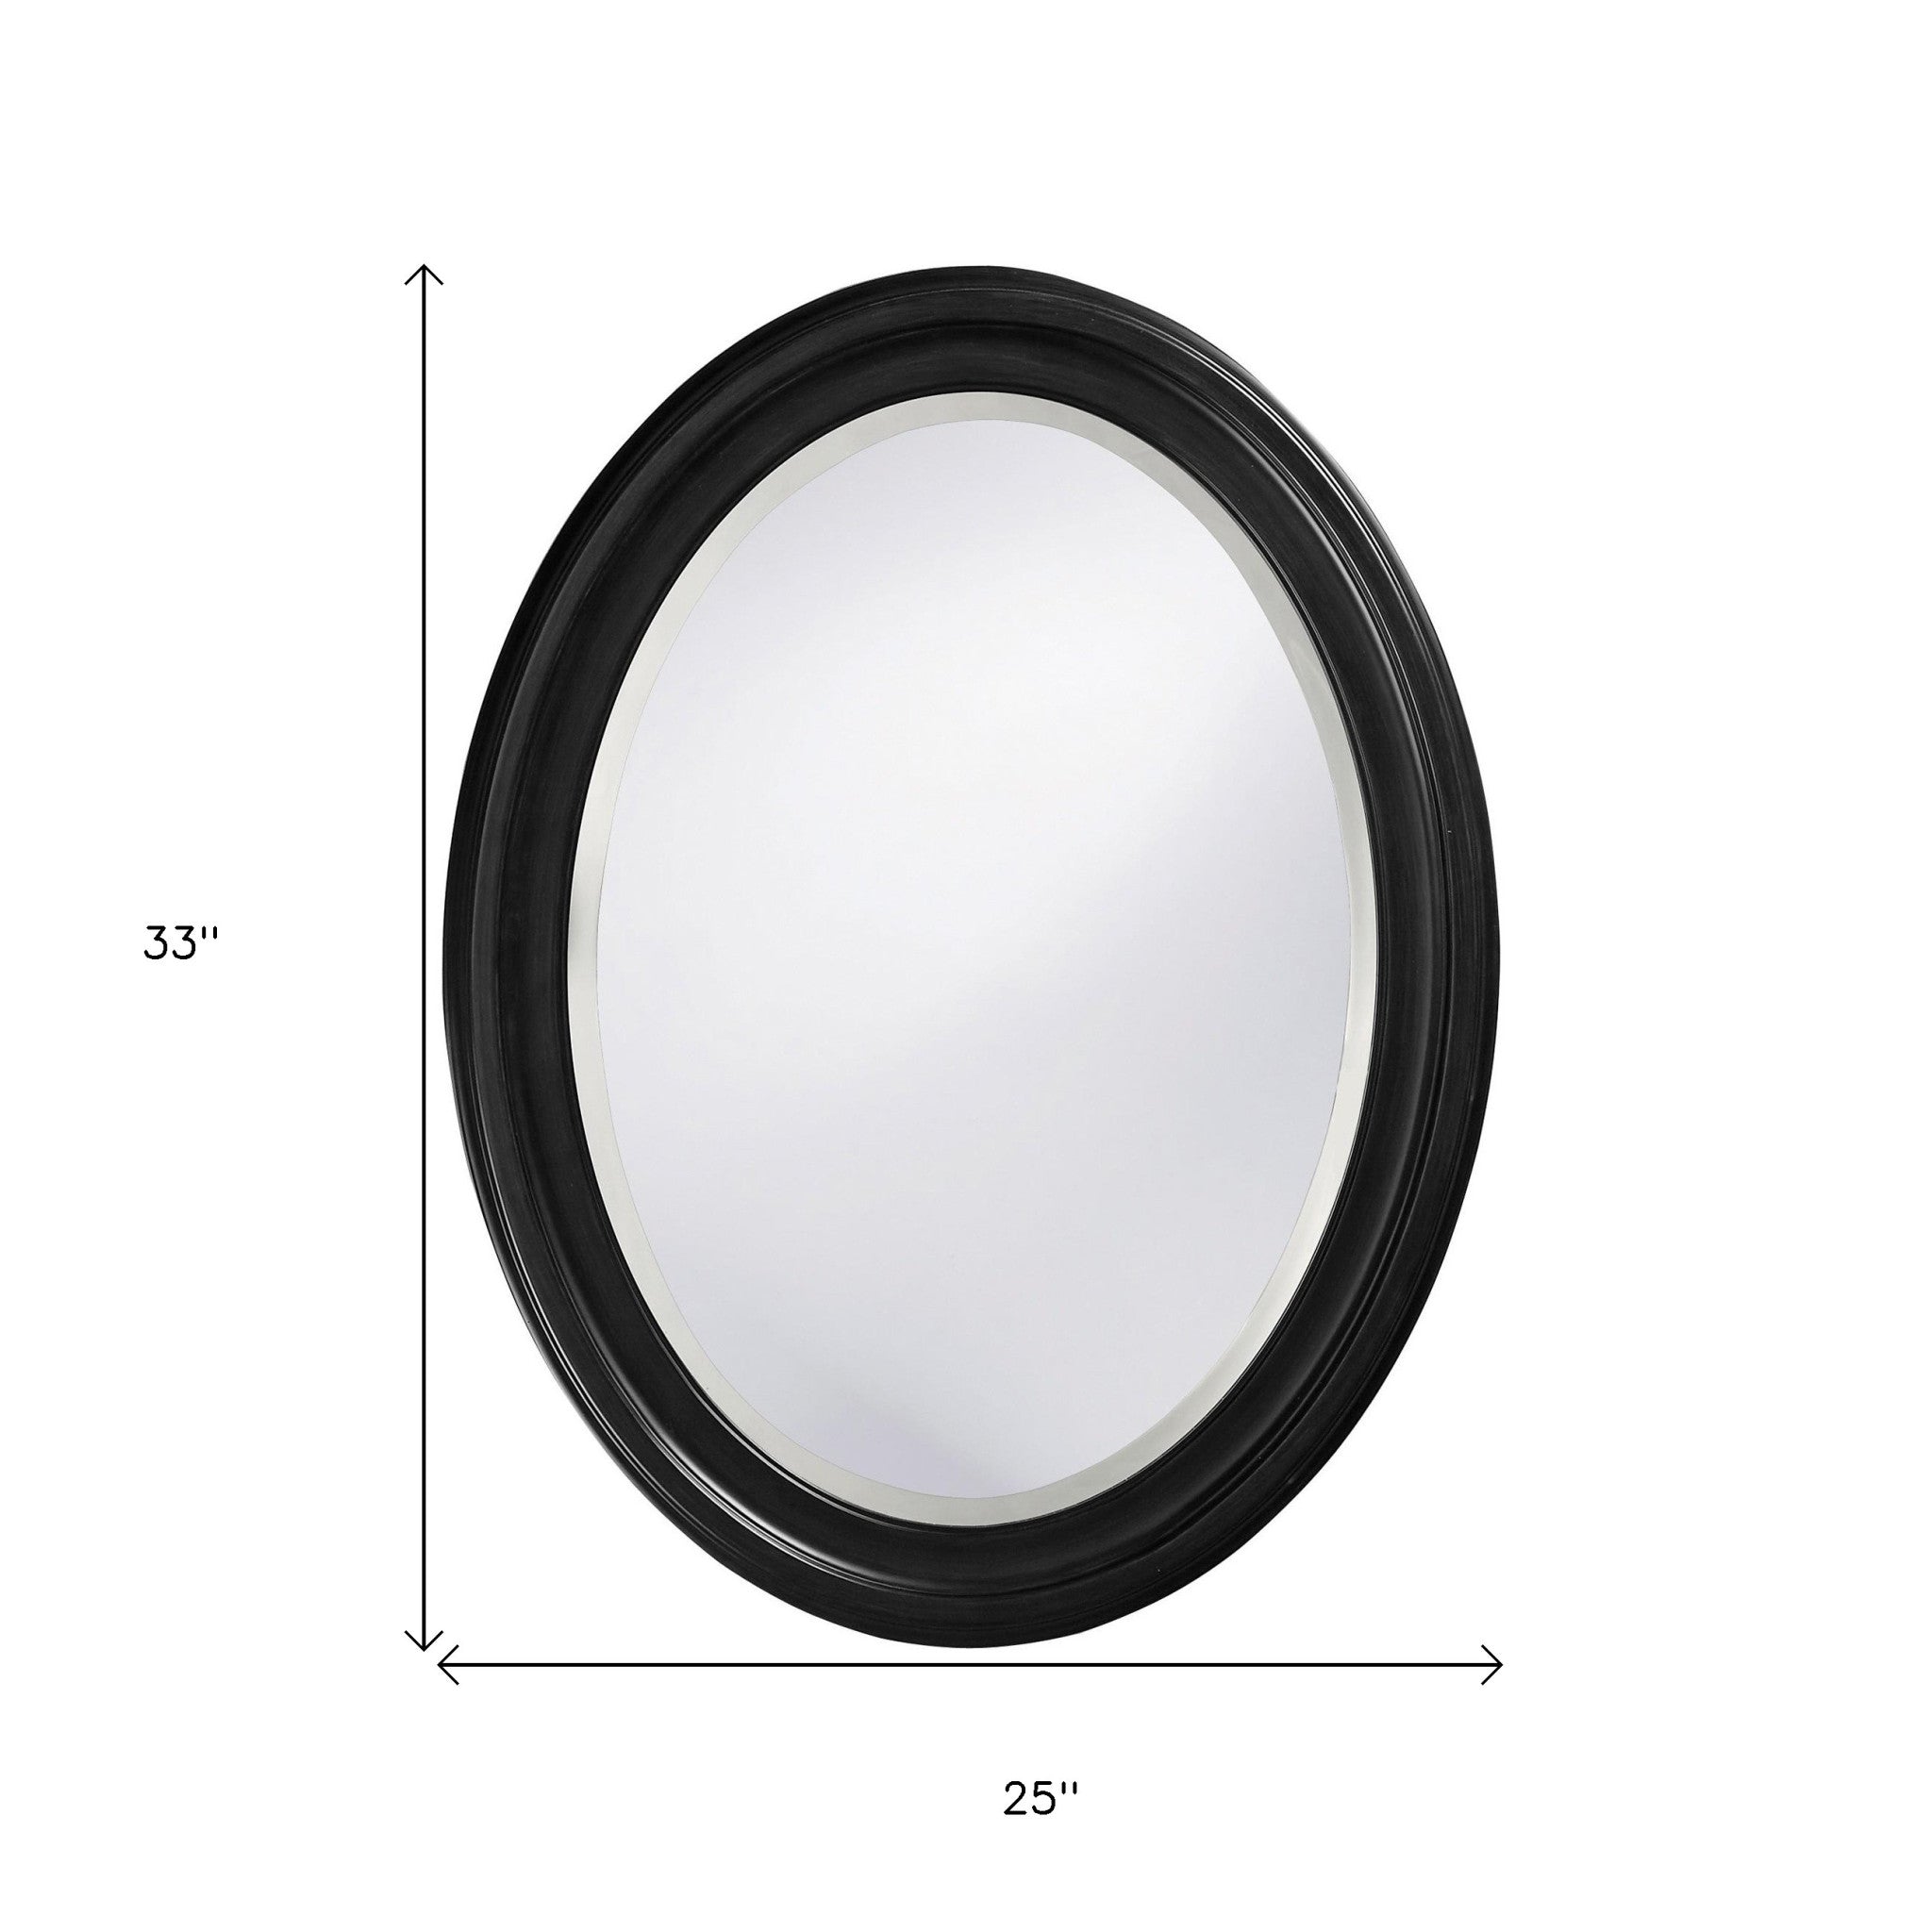 Oval Shaped Black Wood Frame Mirror